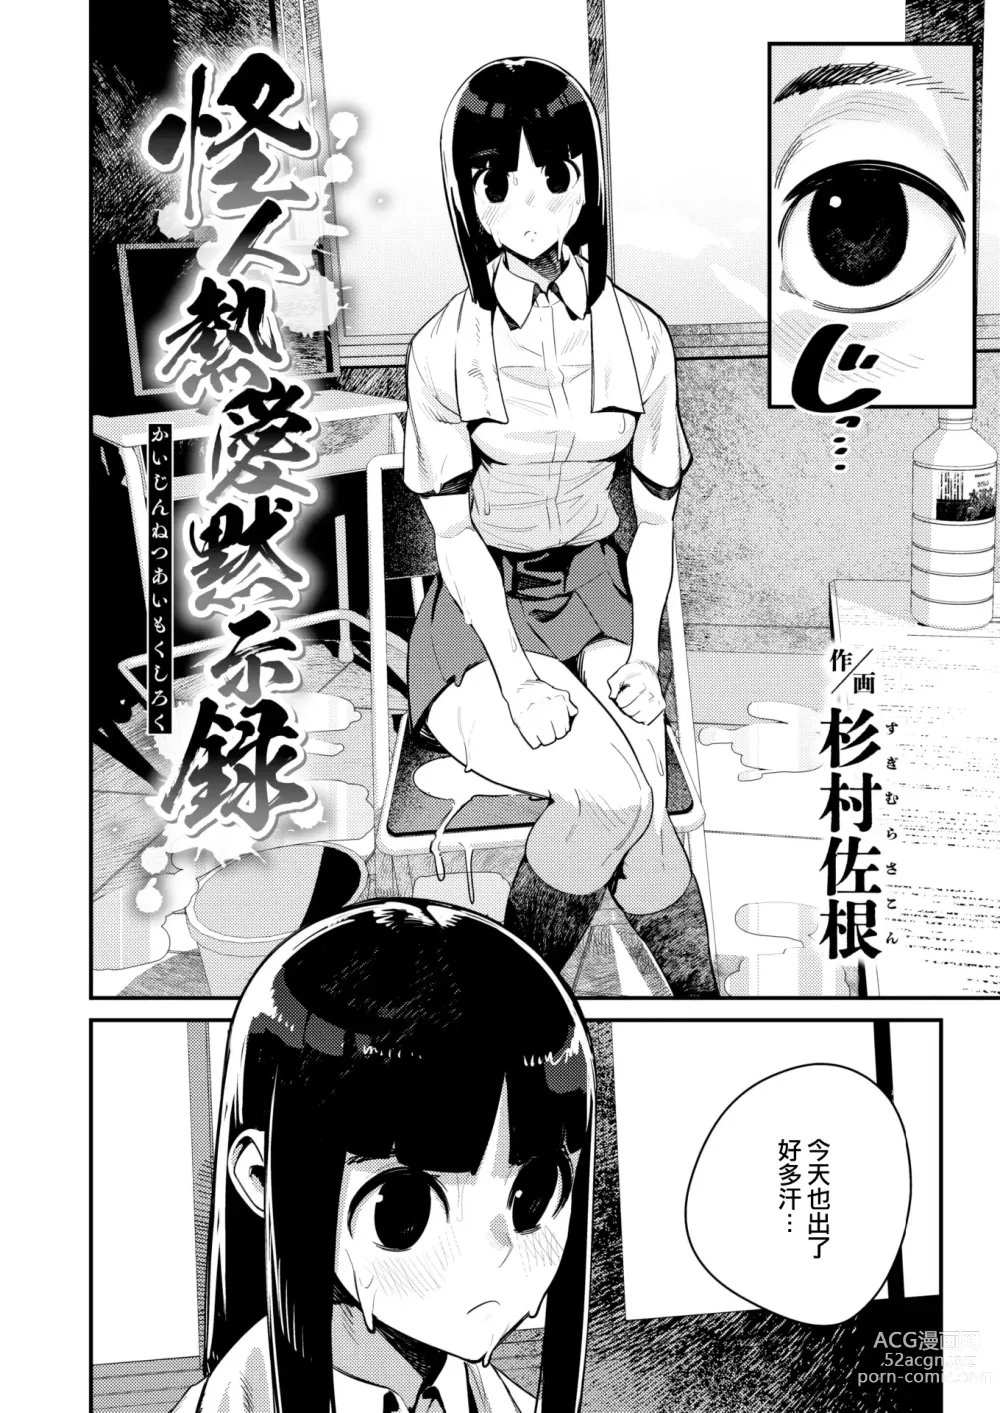 Page 3 of manga Kaijin Netsuai Mokushiroku